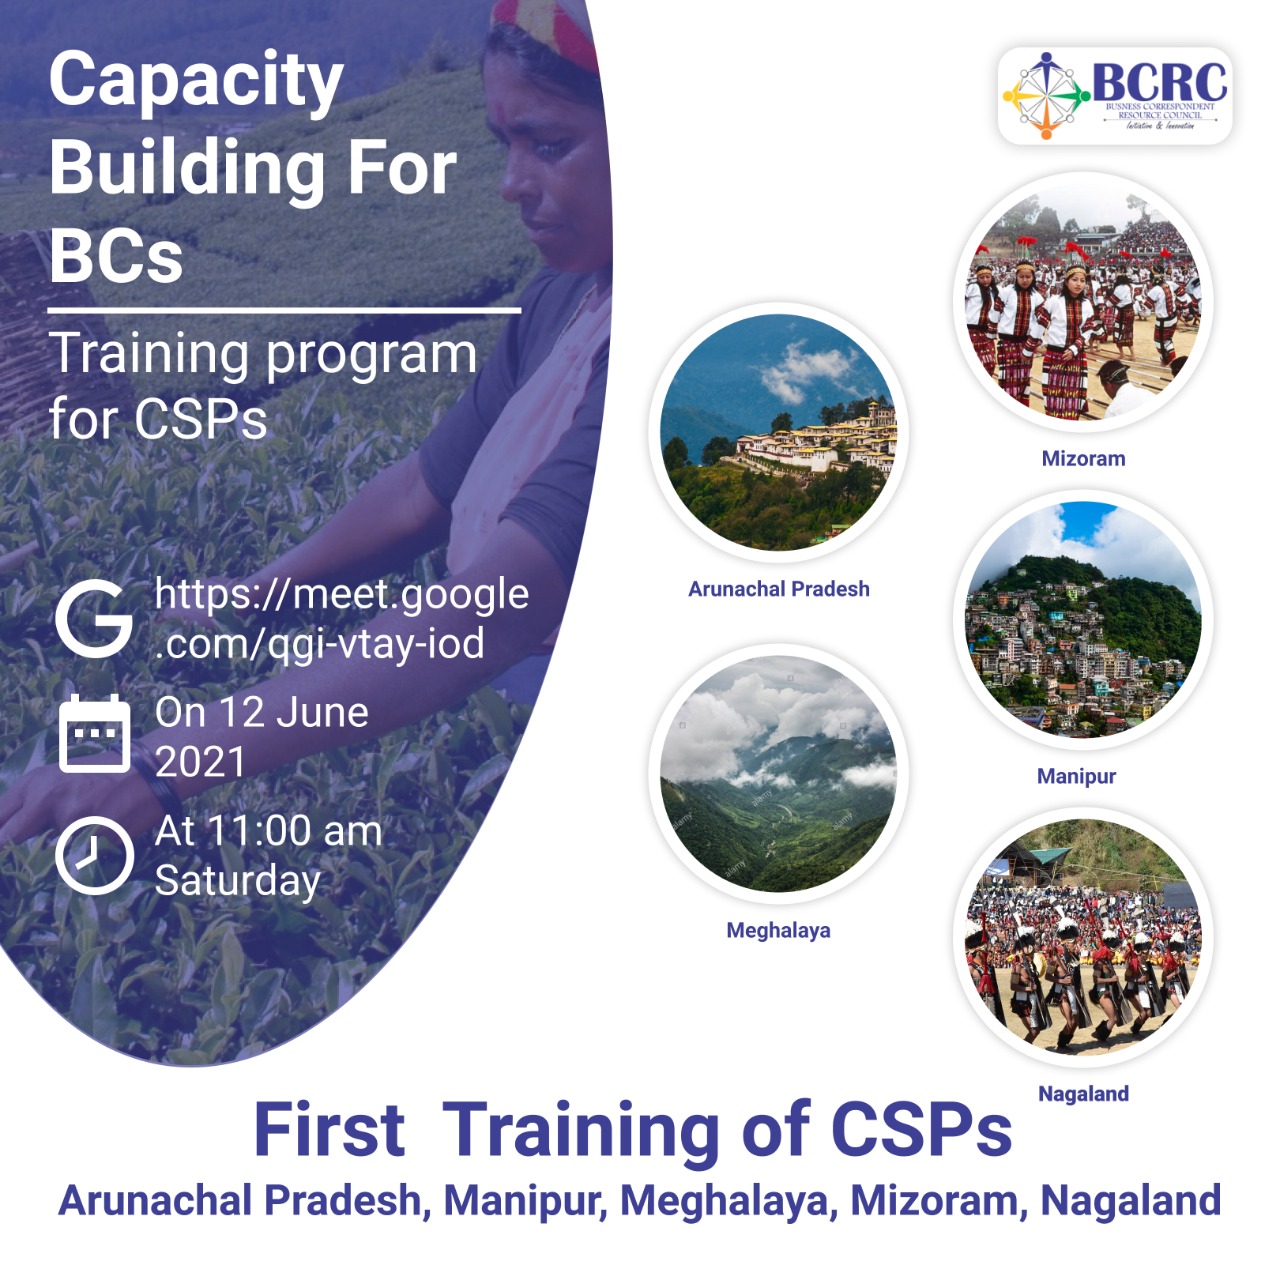 Training program was conducted for CSPs of Arunachal Pradesh, Manipur, Meghalaya, Mizoram and Nagaland